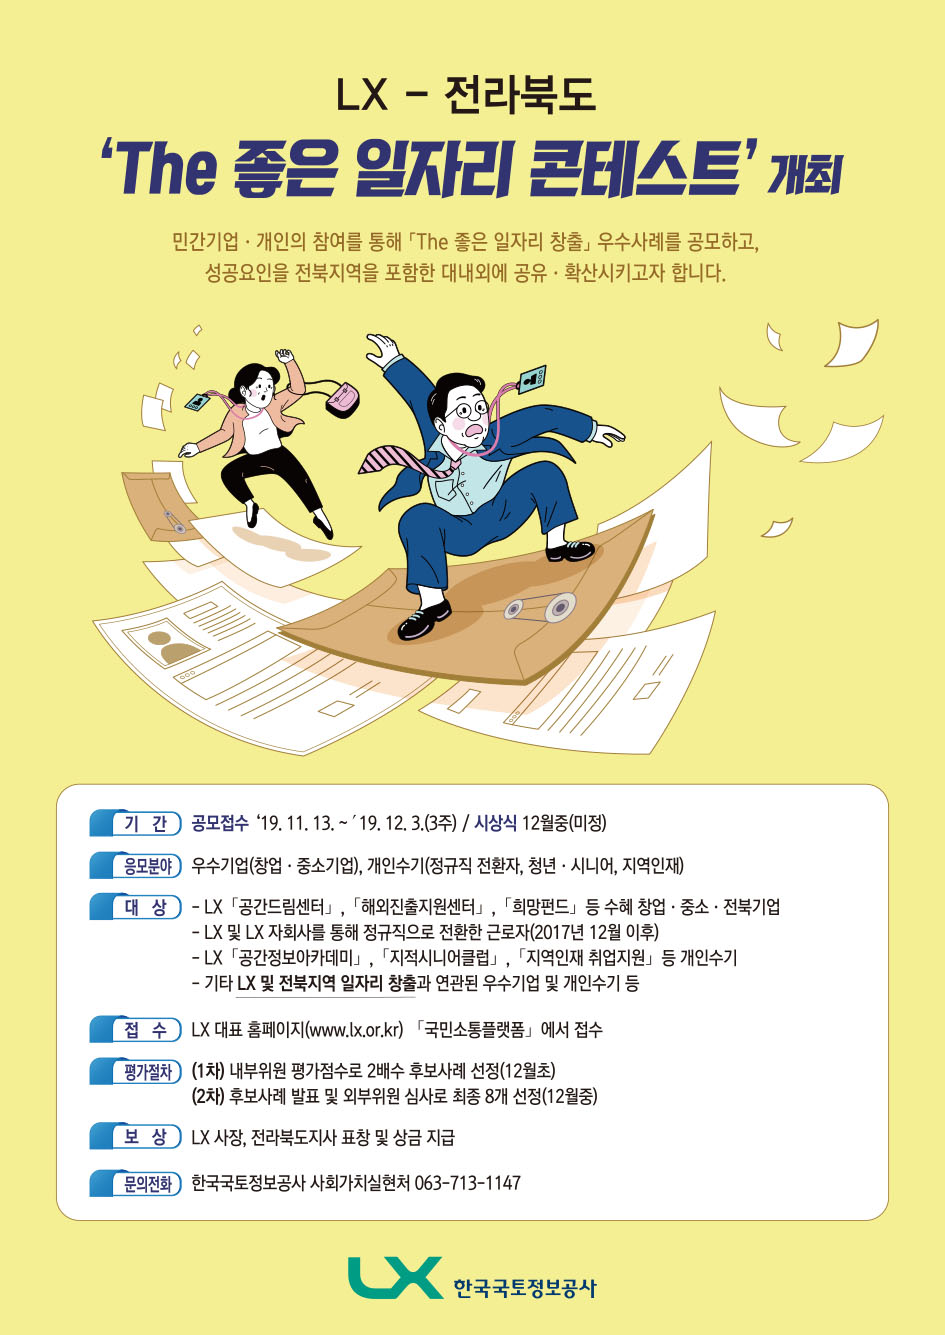 LX-전라북도 The 좋은 일자리 콘테스트 개최 공고 포스터 이미지 입니다. 상세내용은 첨부된 공고문을 참조해 주세요.